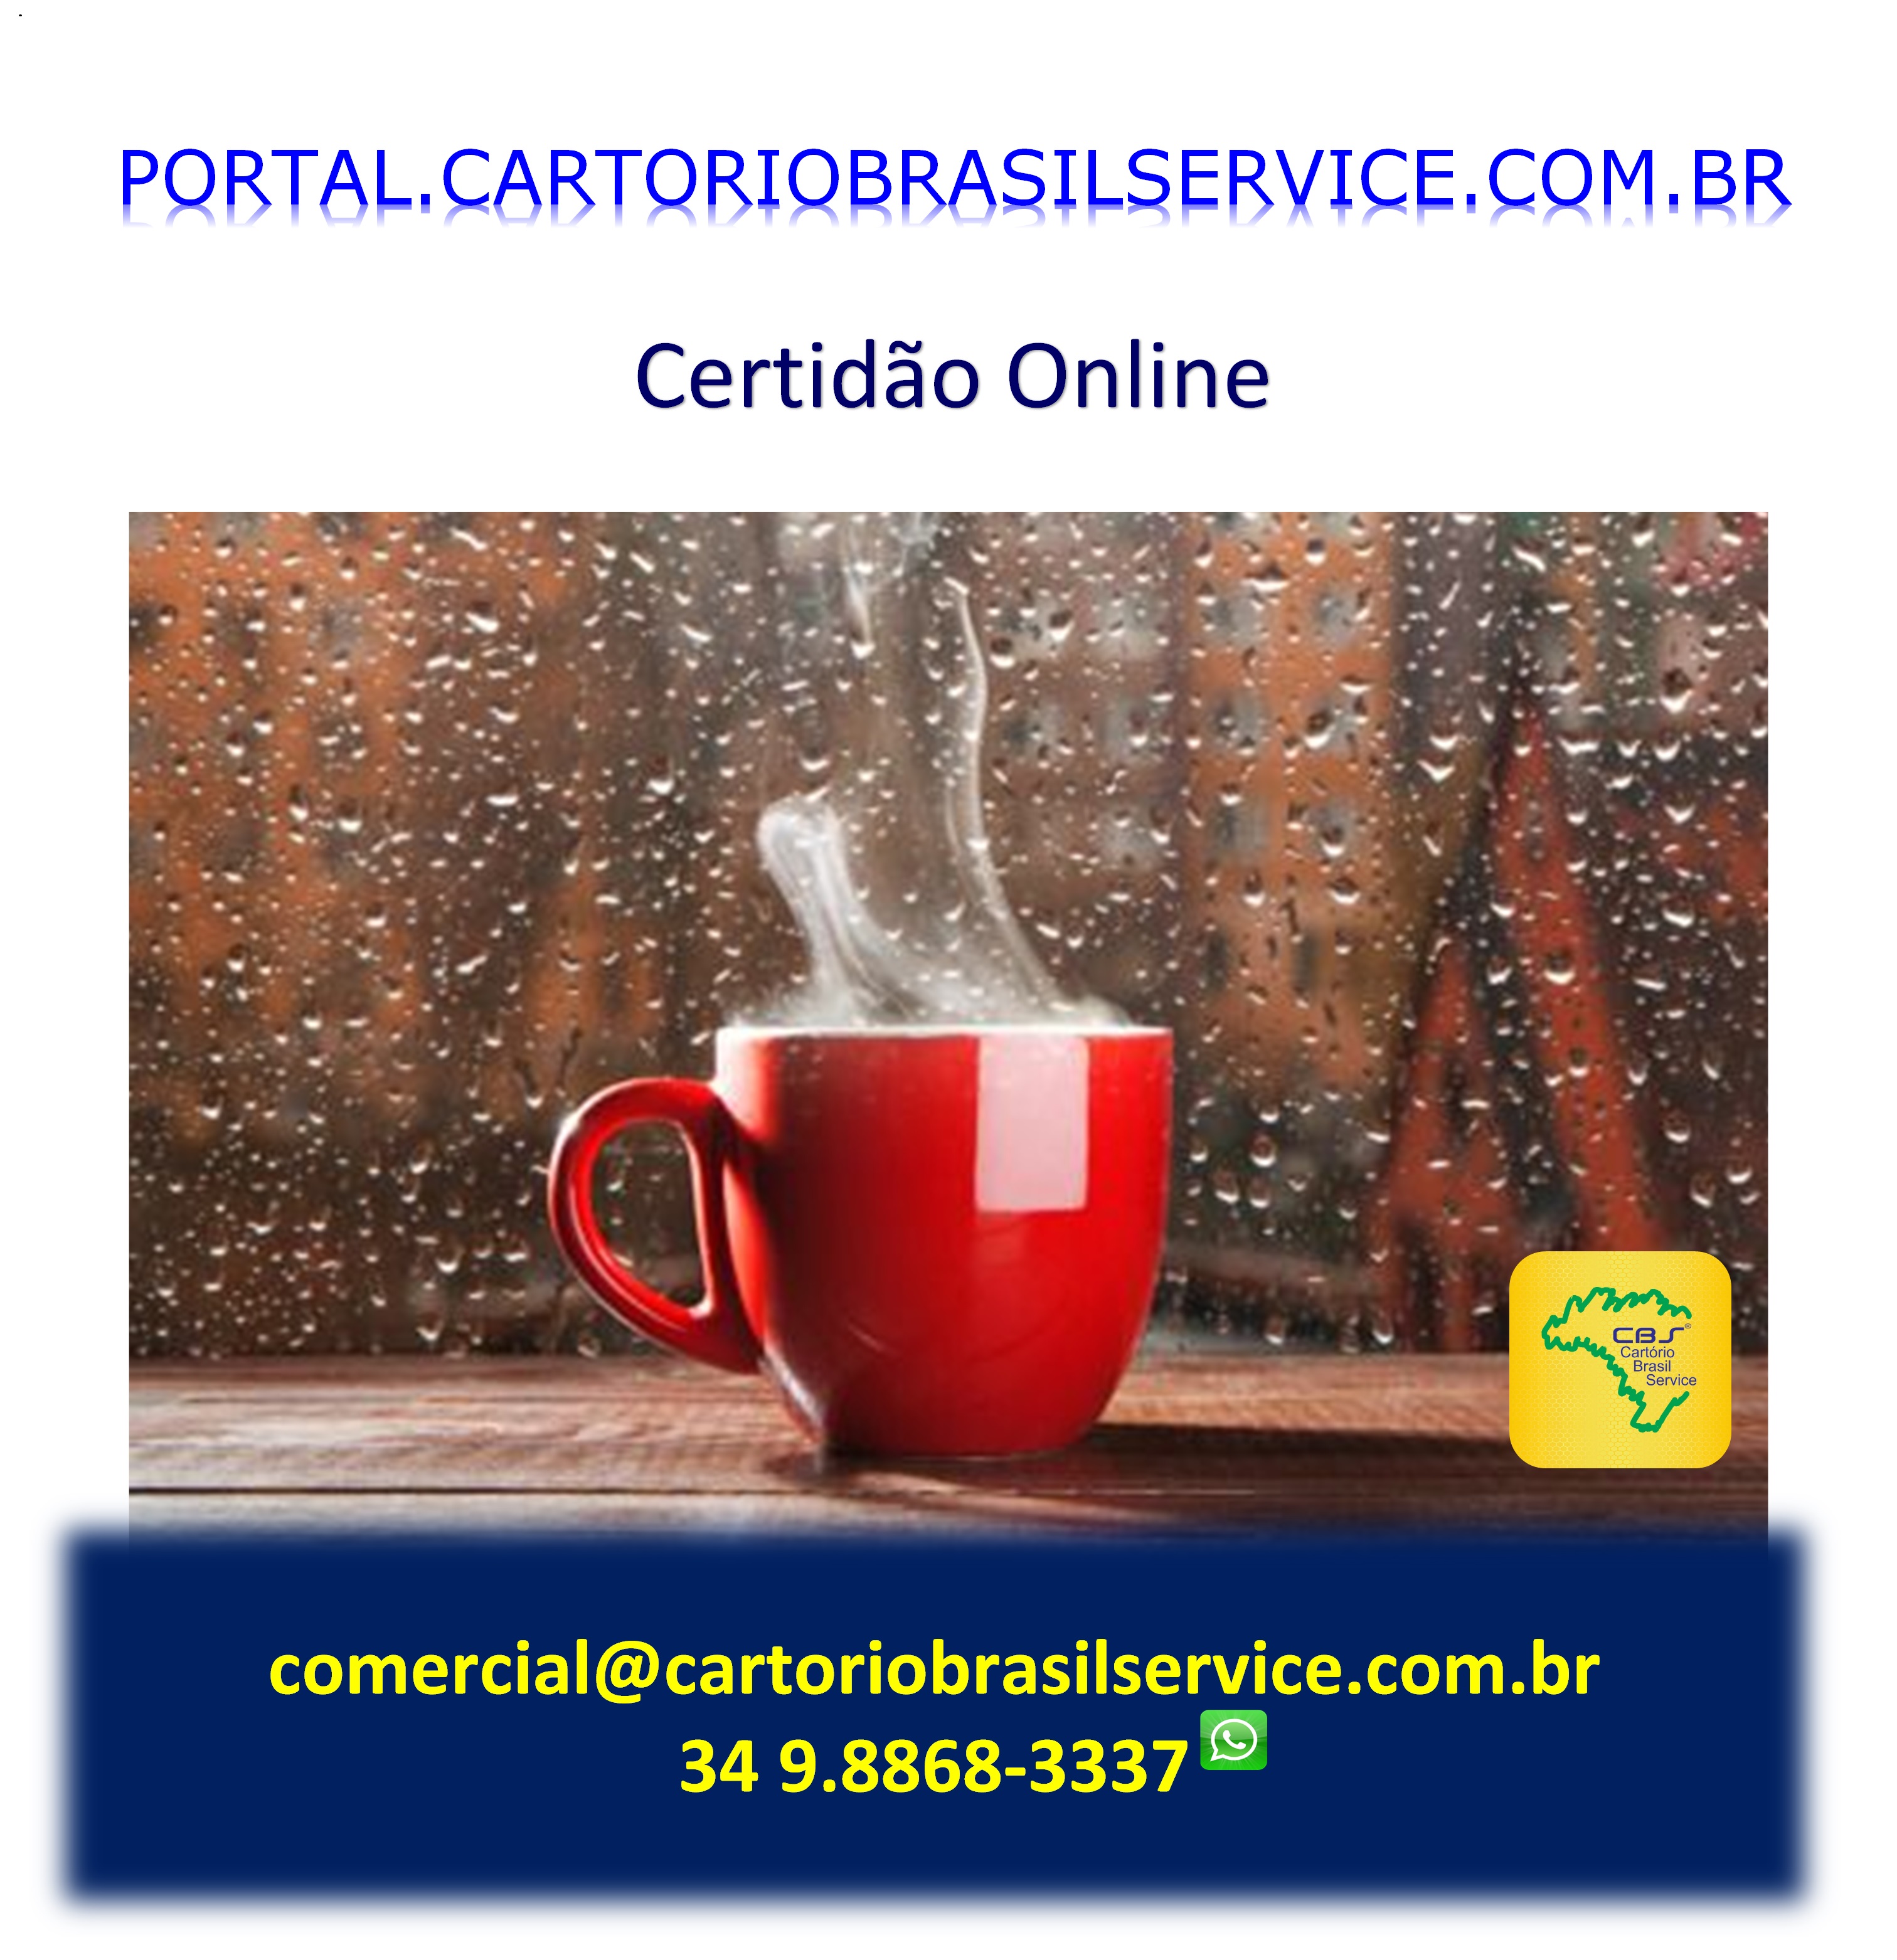 Cartório Brasil Service Cetidões Online Fácil